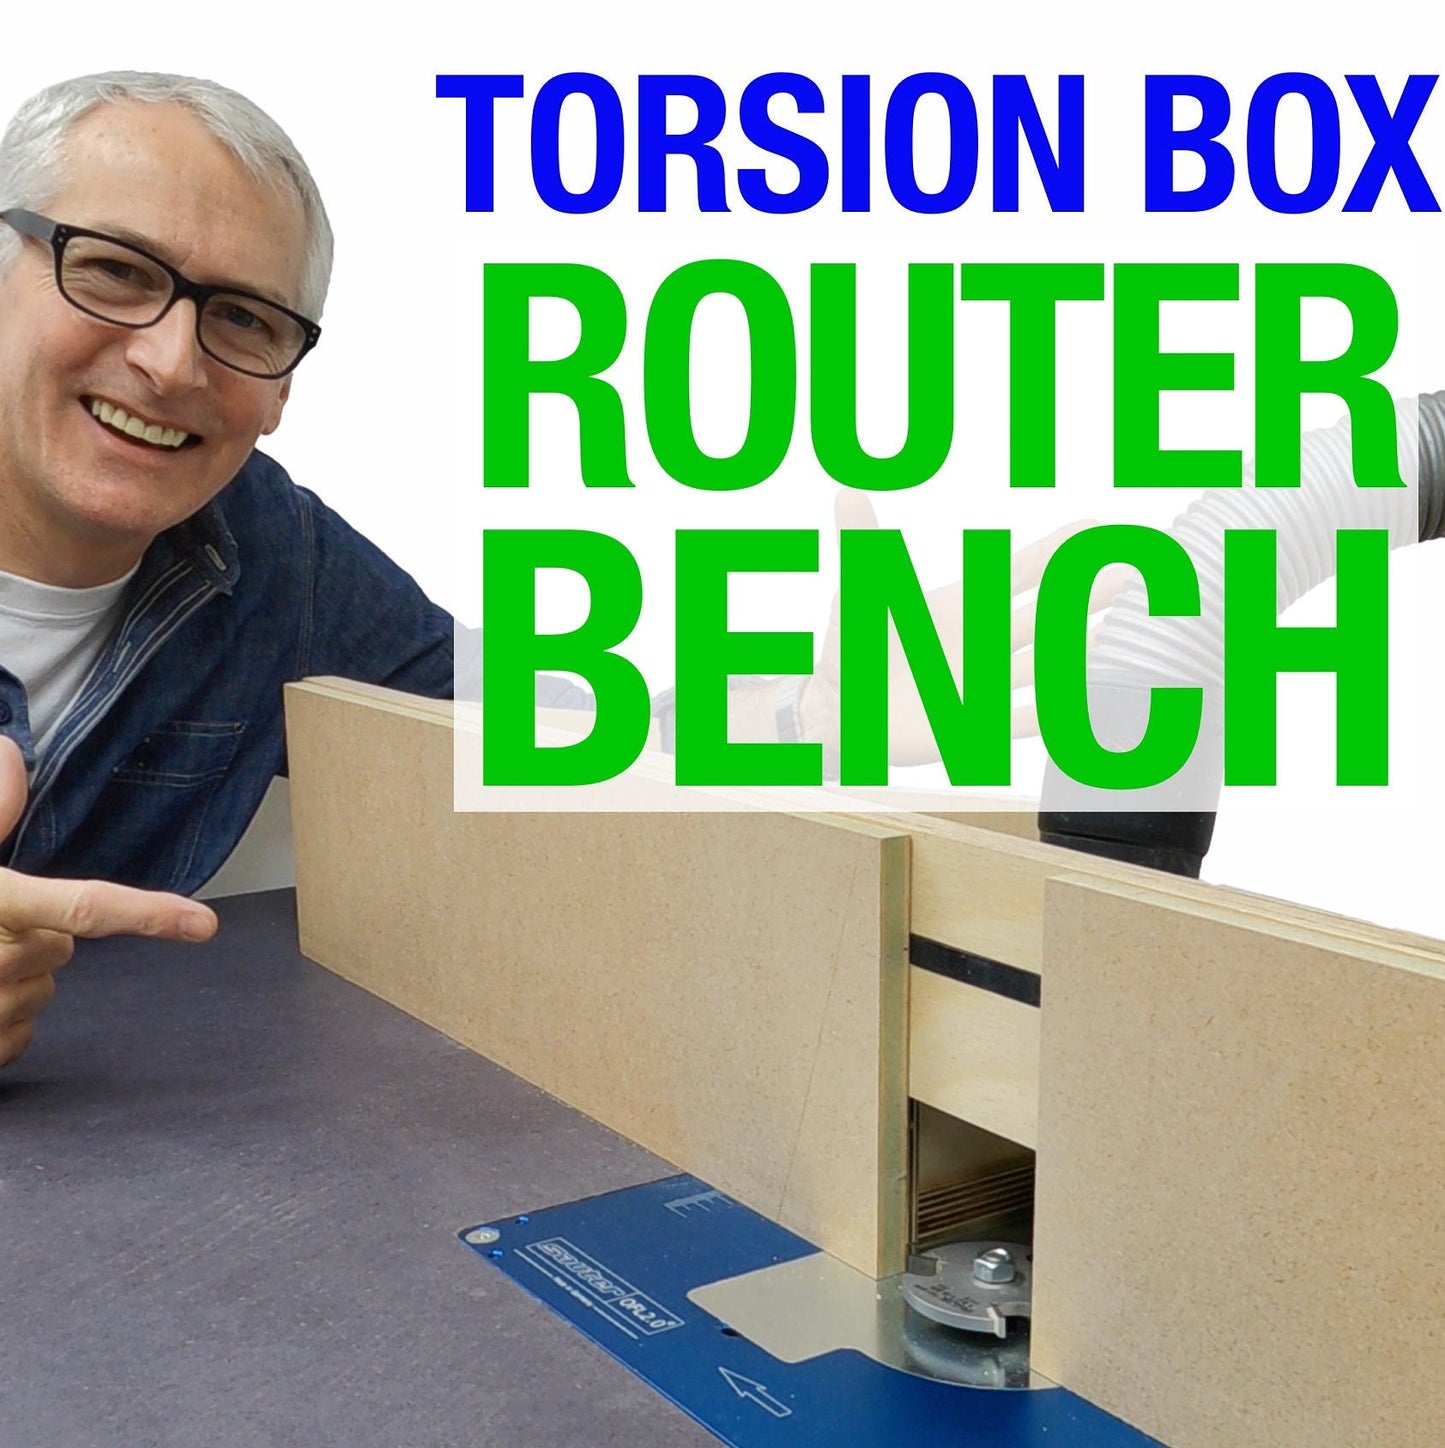 Plans for Torsion Box Router Bench